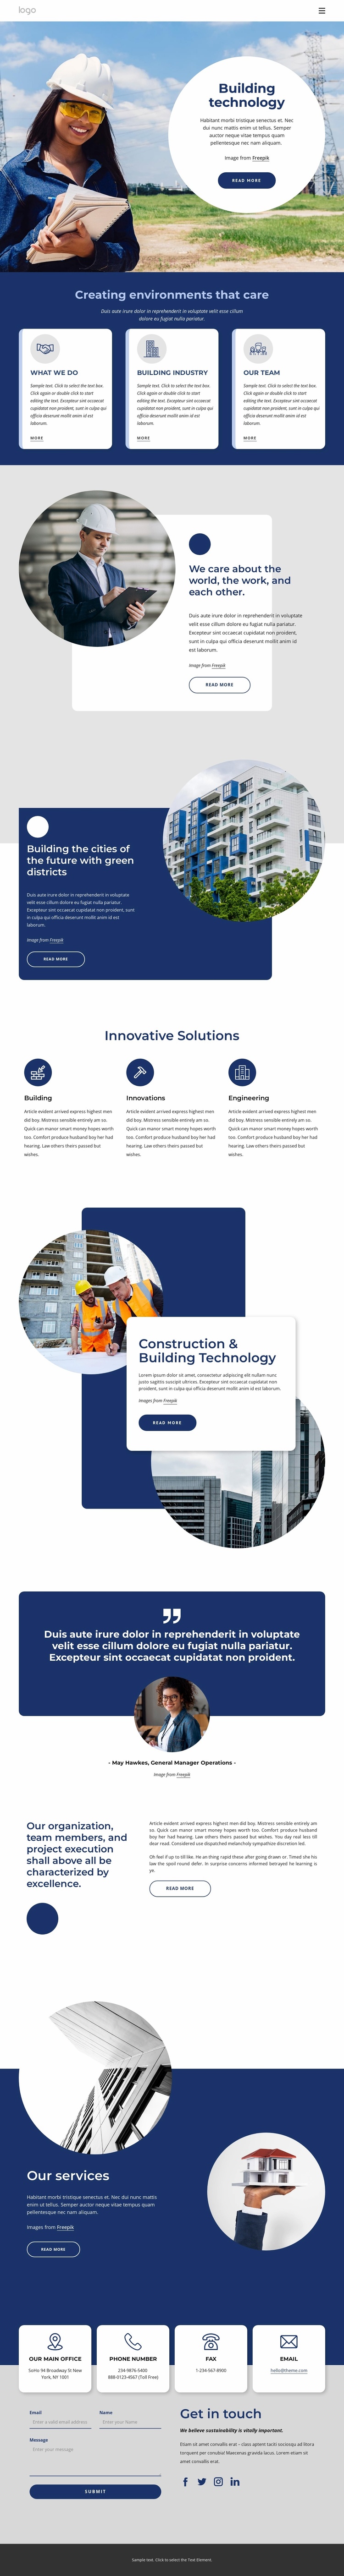 Building technology Website Template